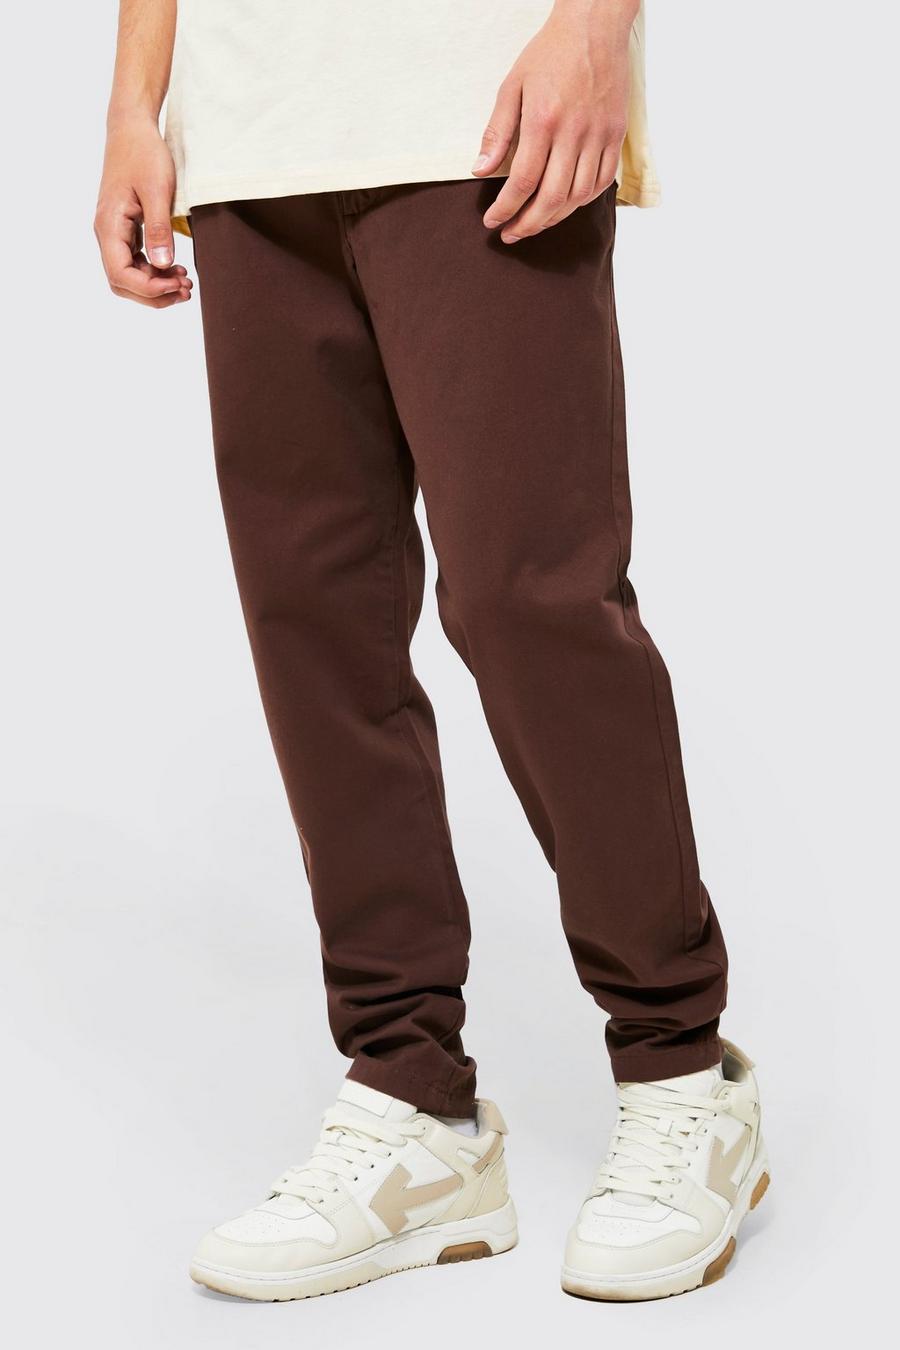 Pantaloni Chino Slim Fit, Chocolate marrone